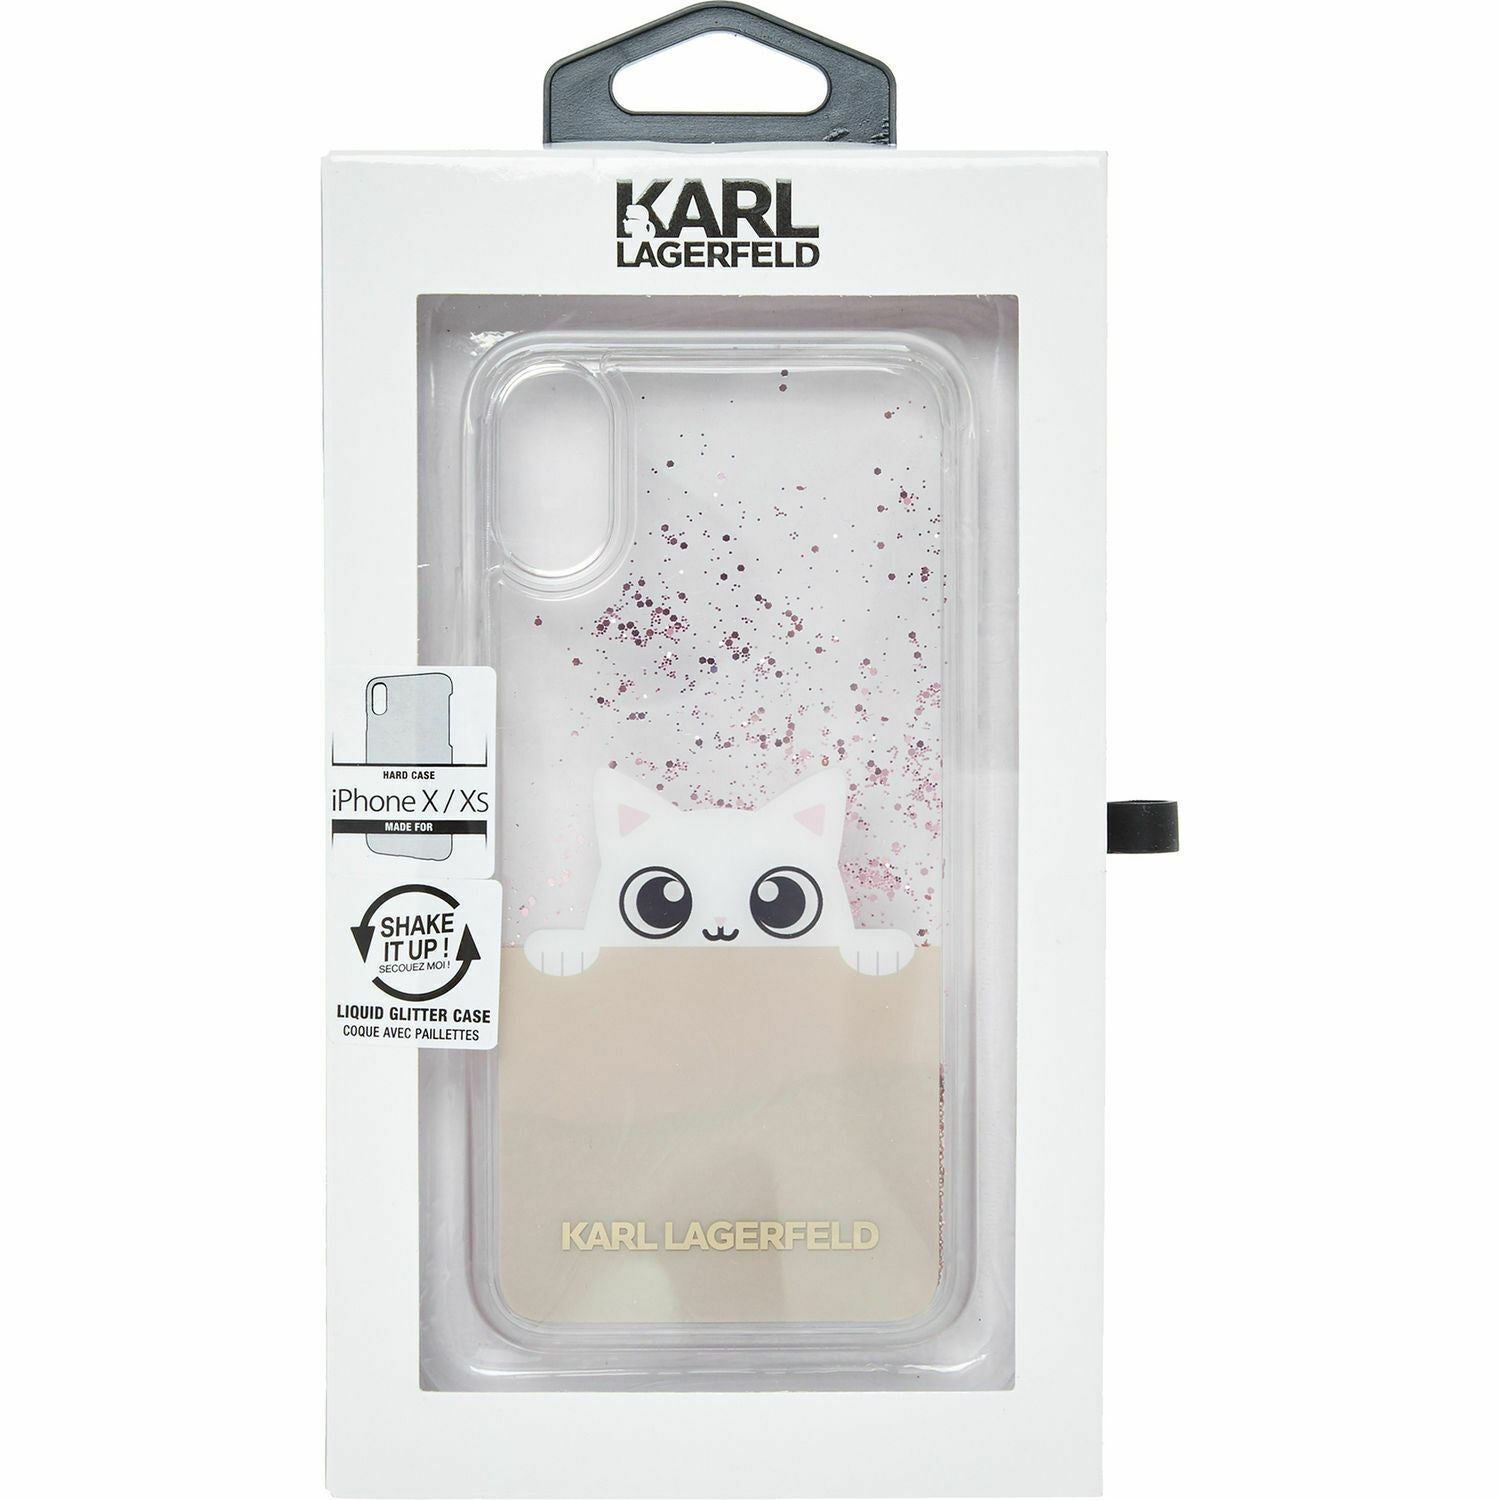 KARL LAGERFELD Peek A Boo Liquid Glitter Phone Case-i PhoneX/Xs